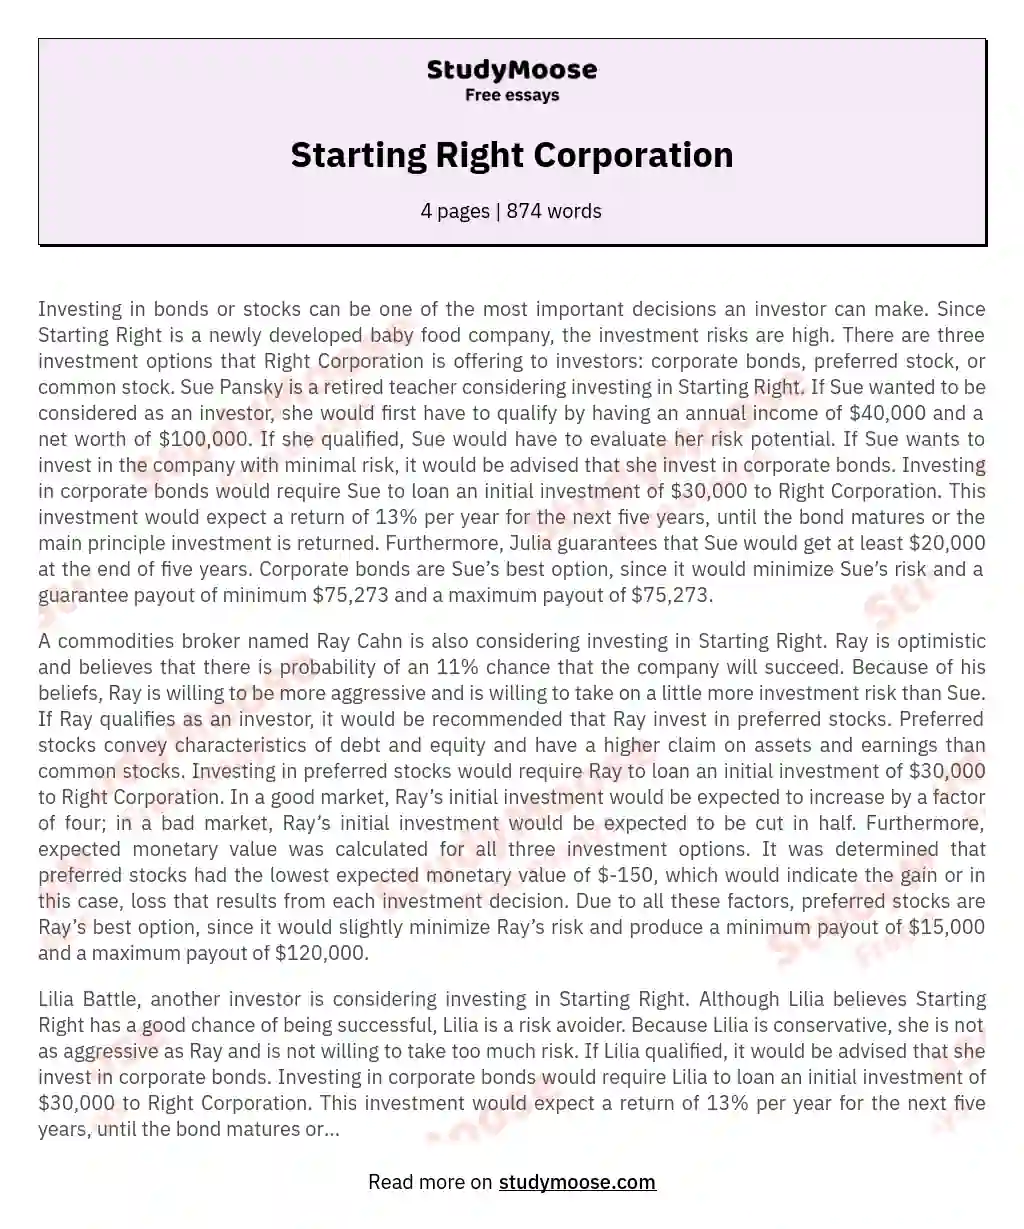 Starting Right Corporation essay